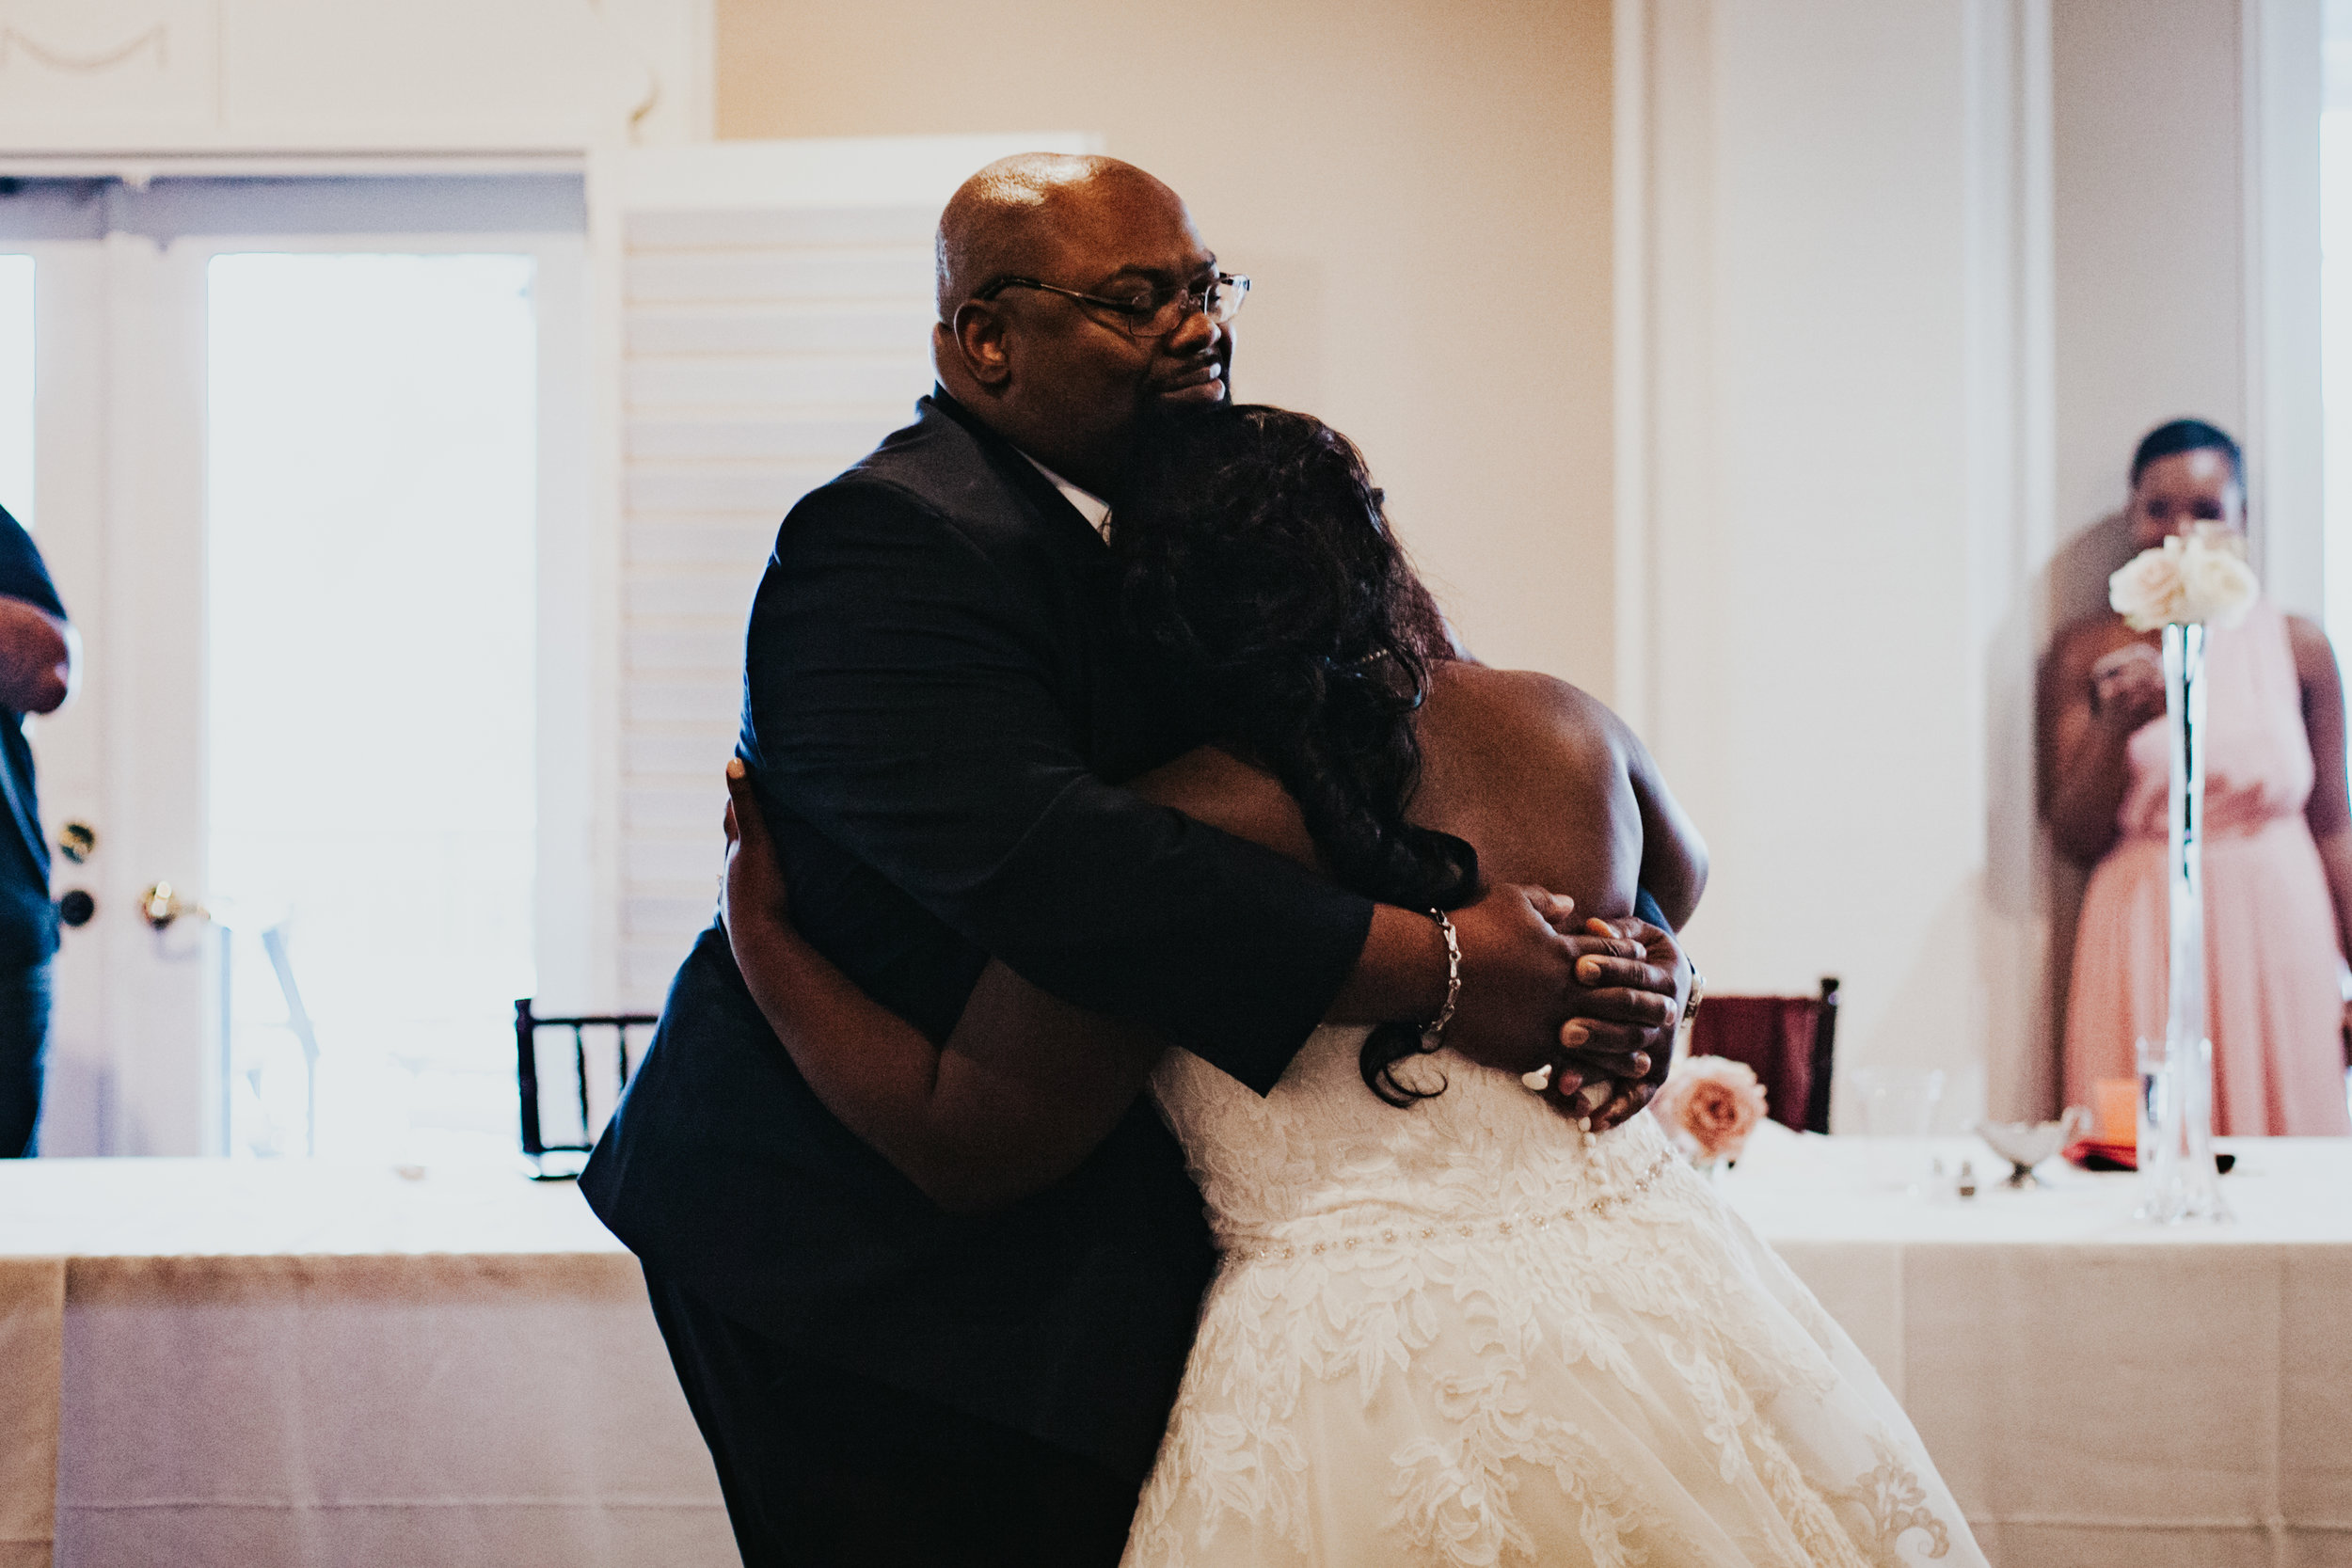  Hope Valley Country Club, Raleigh NC | Fall wedding | Wedding reception photos | Daddy-daughter dance photos | Marina Rey Photography 